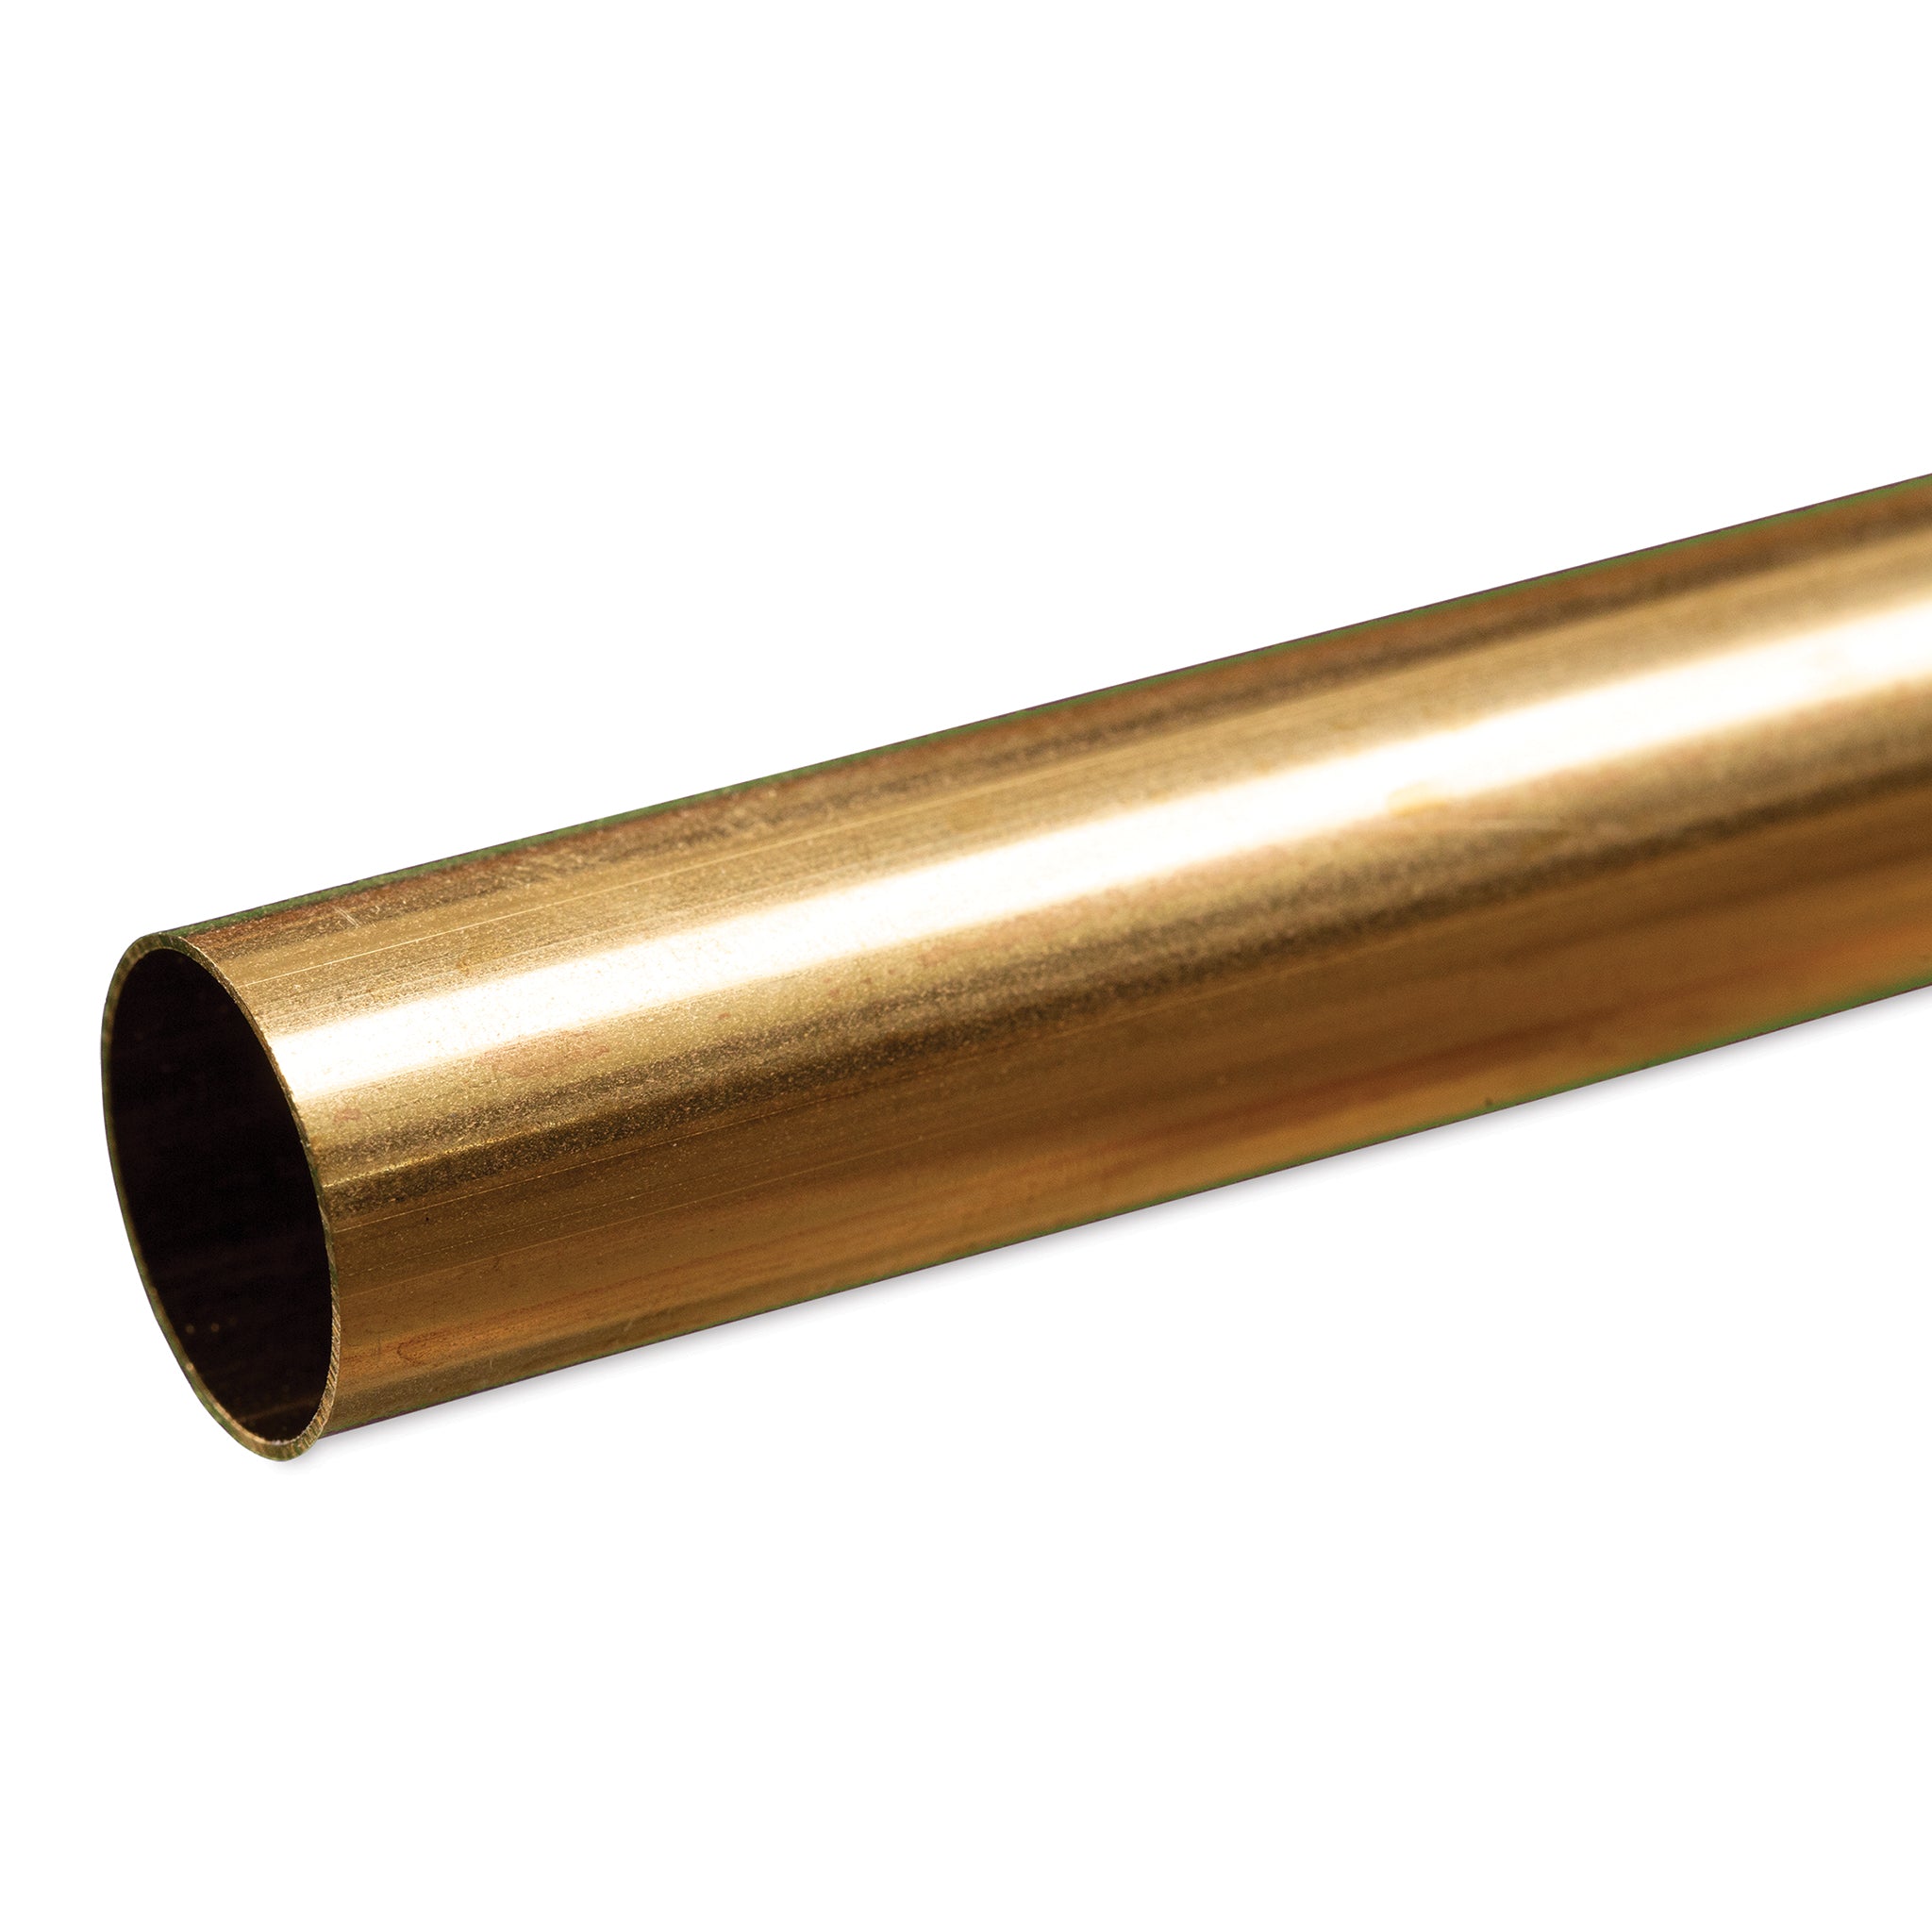 K&S Metals 8144 Round Brass Tube 21/32" OD x 0.014" Wall x 12" Long (1 Piece)